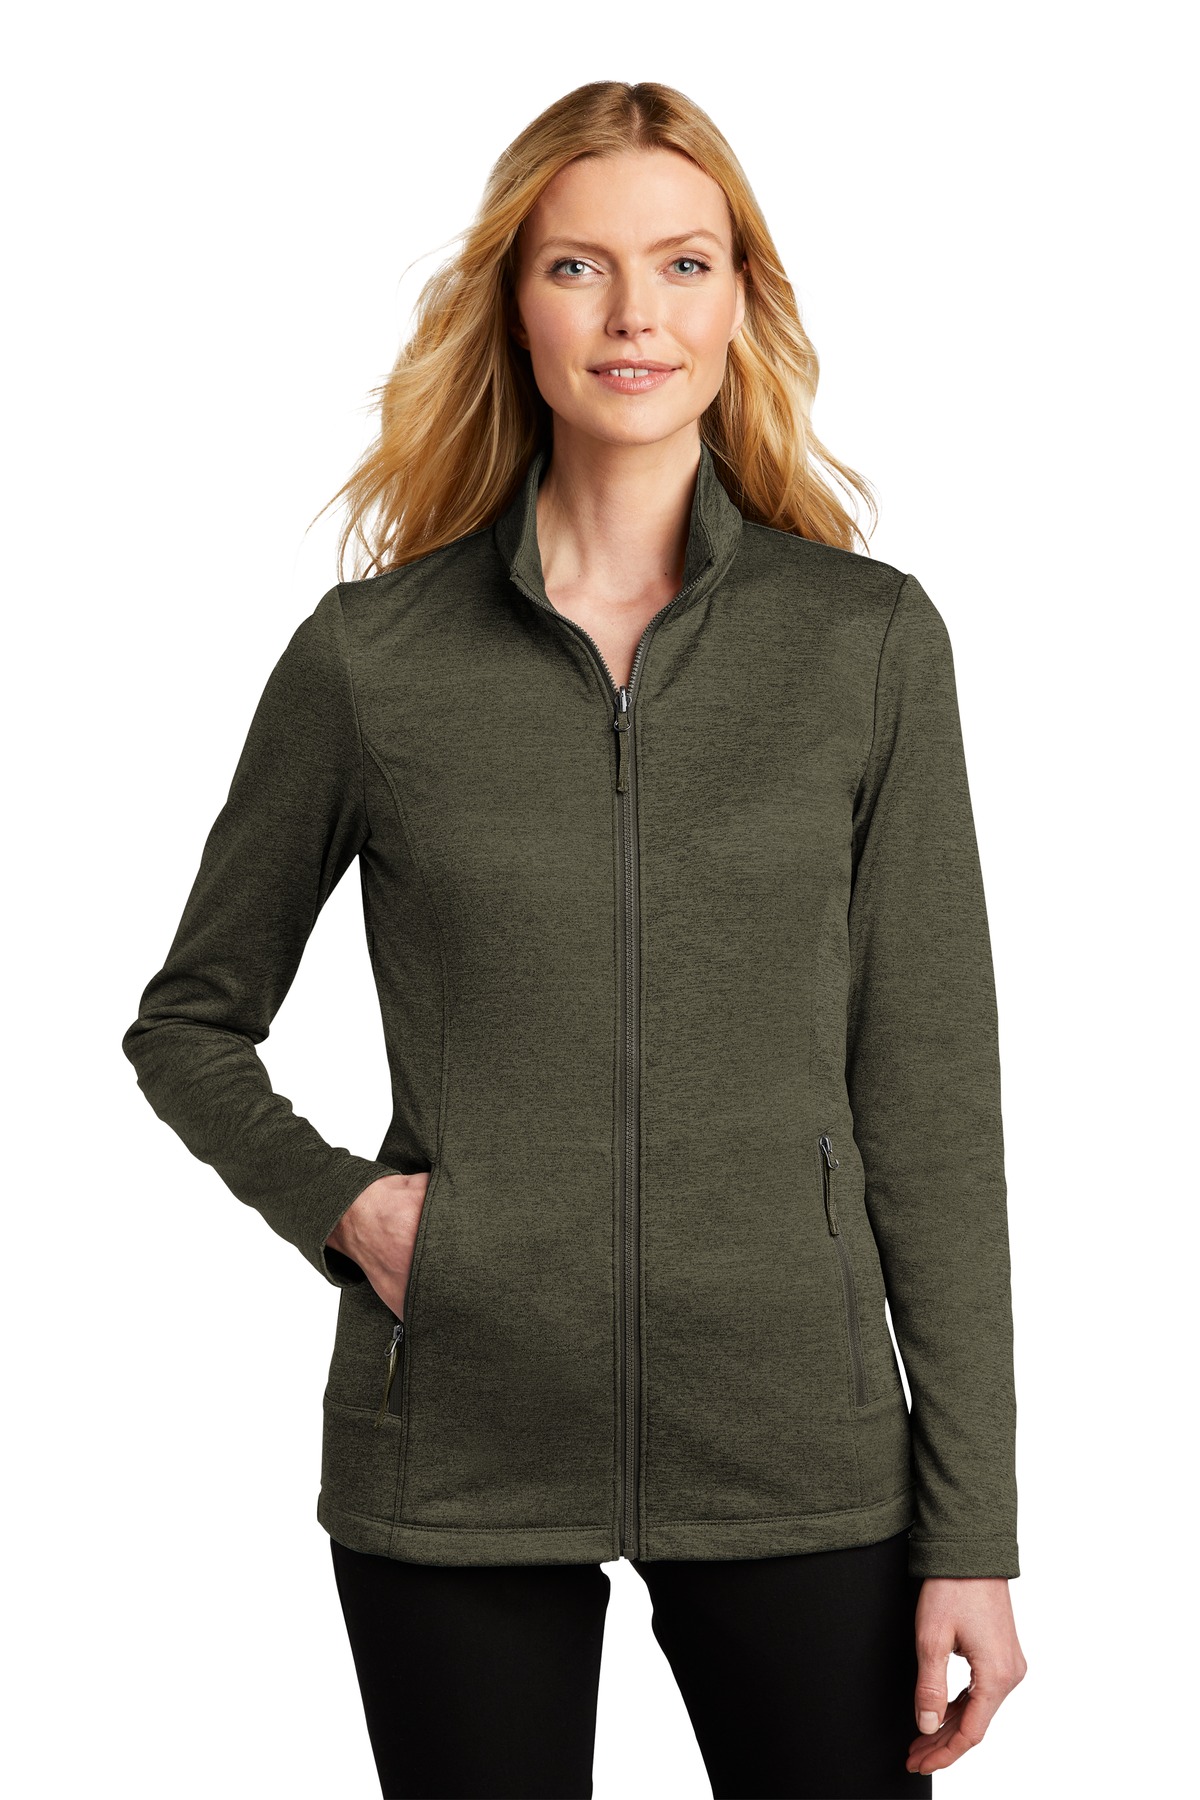 Fitted model women`s long jacket with hood and zip fastening -  Baduglobal.com | Long jackets for women, Winter jackets, Parka women